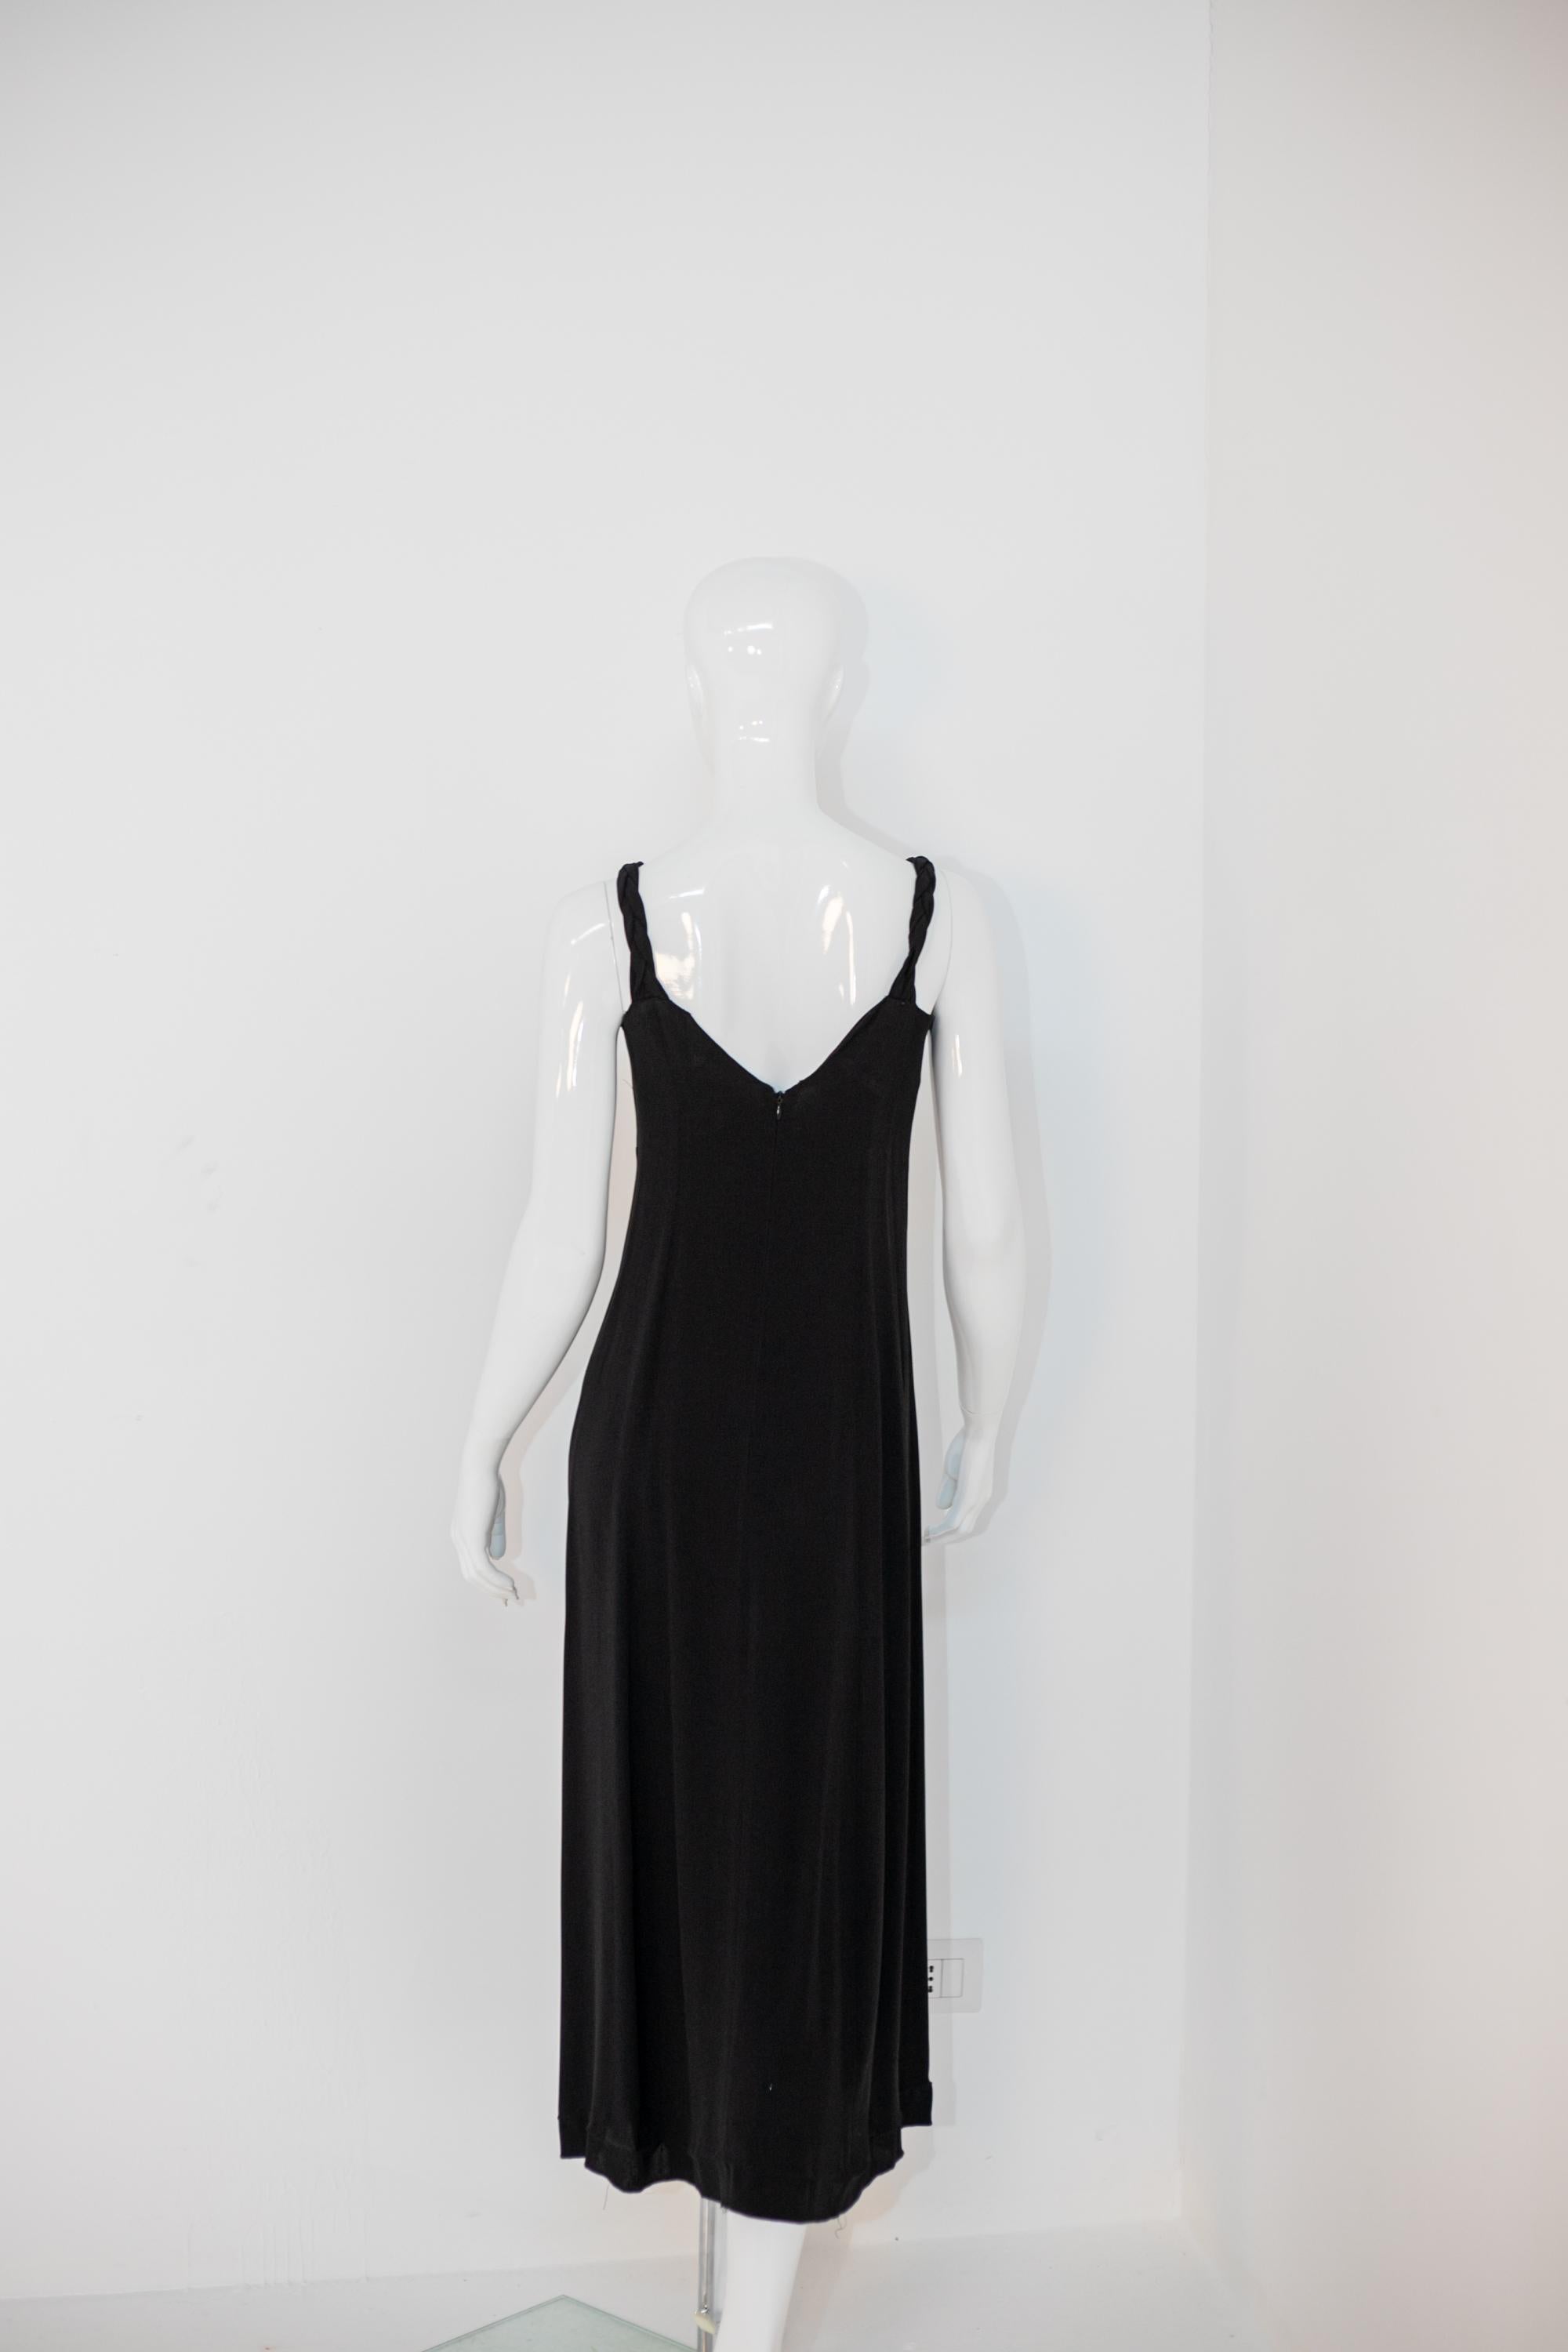 Vintage Long Black Dress with Straps For Sale 4